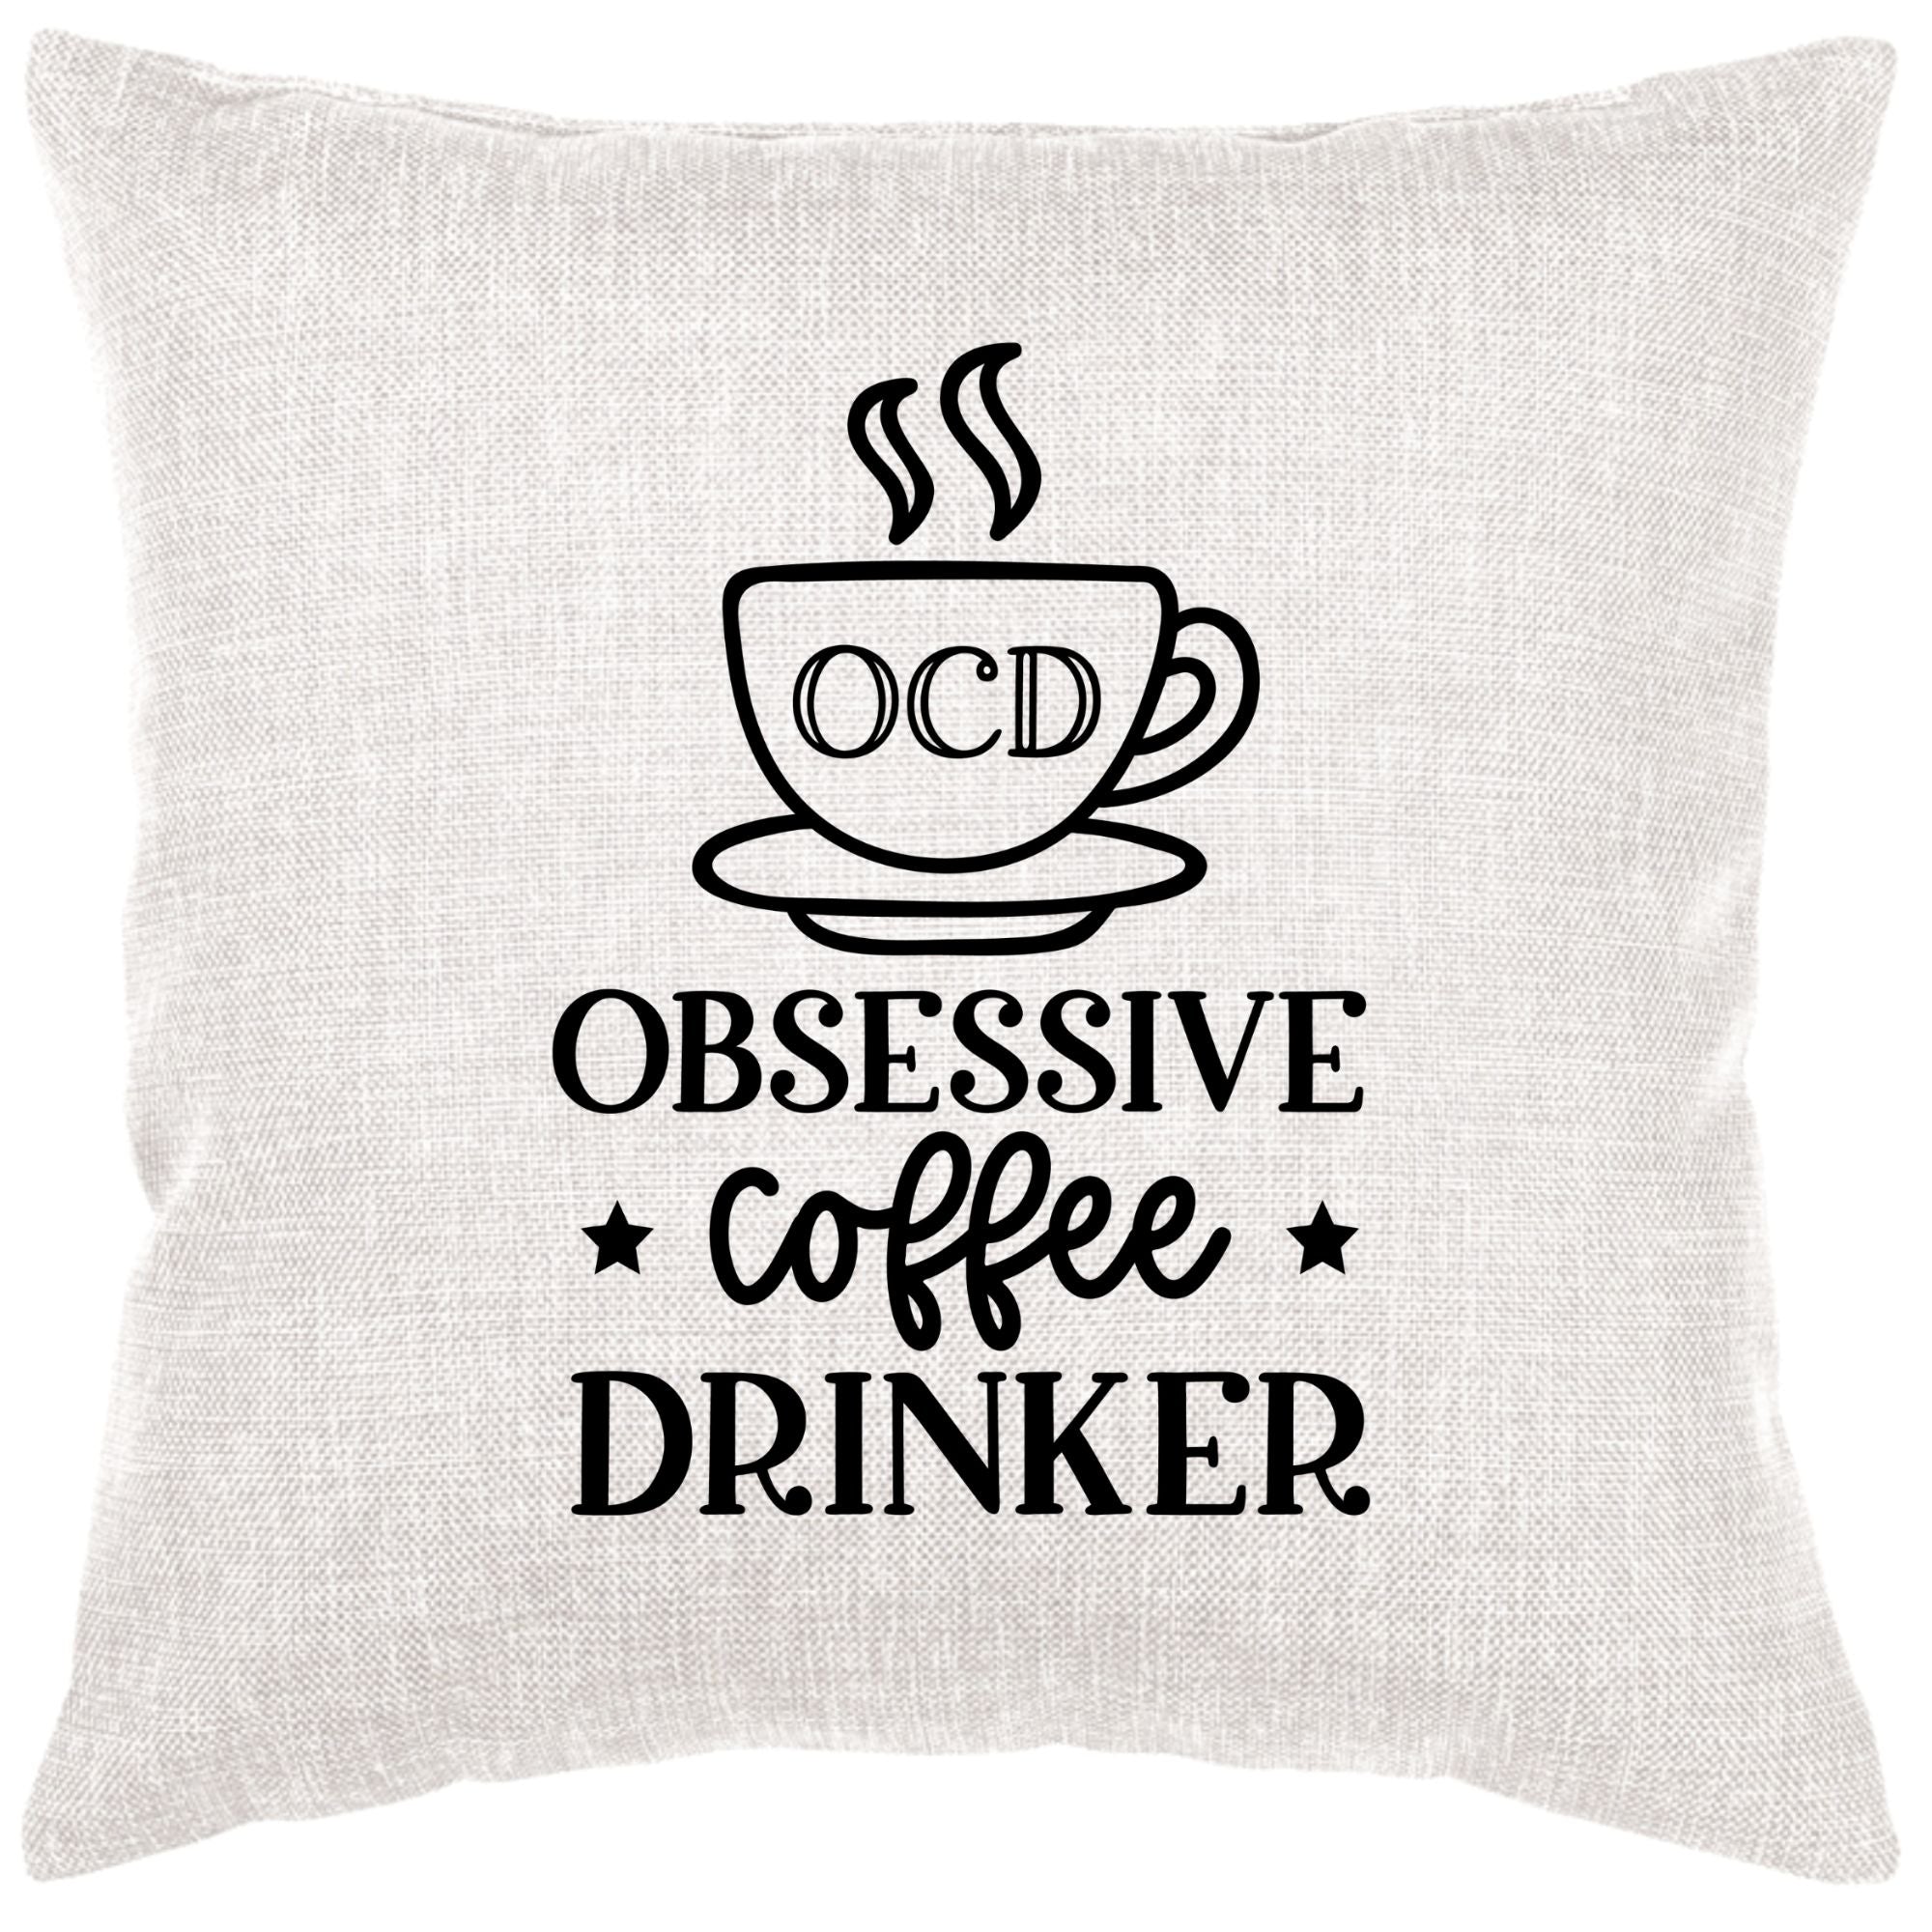 Obsessive Coffee Drinker Down Pillow